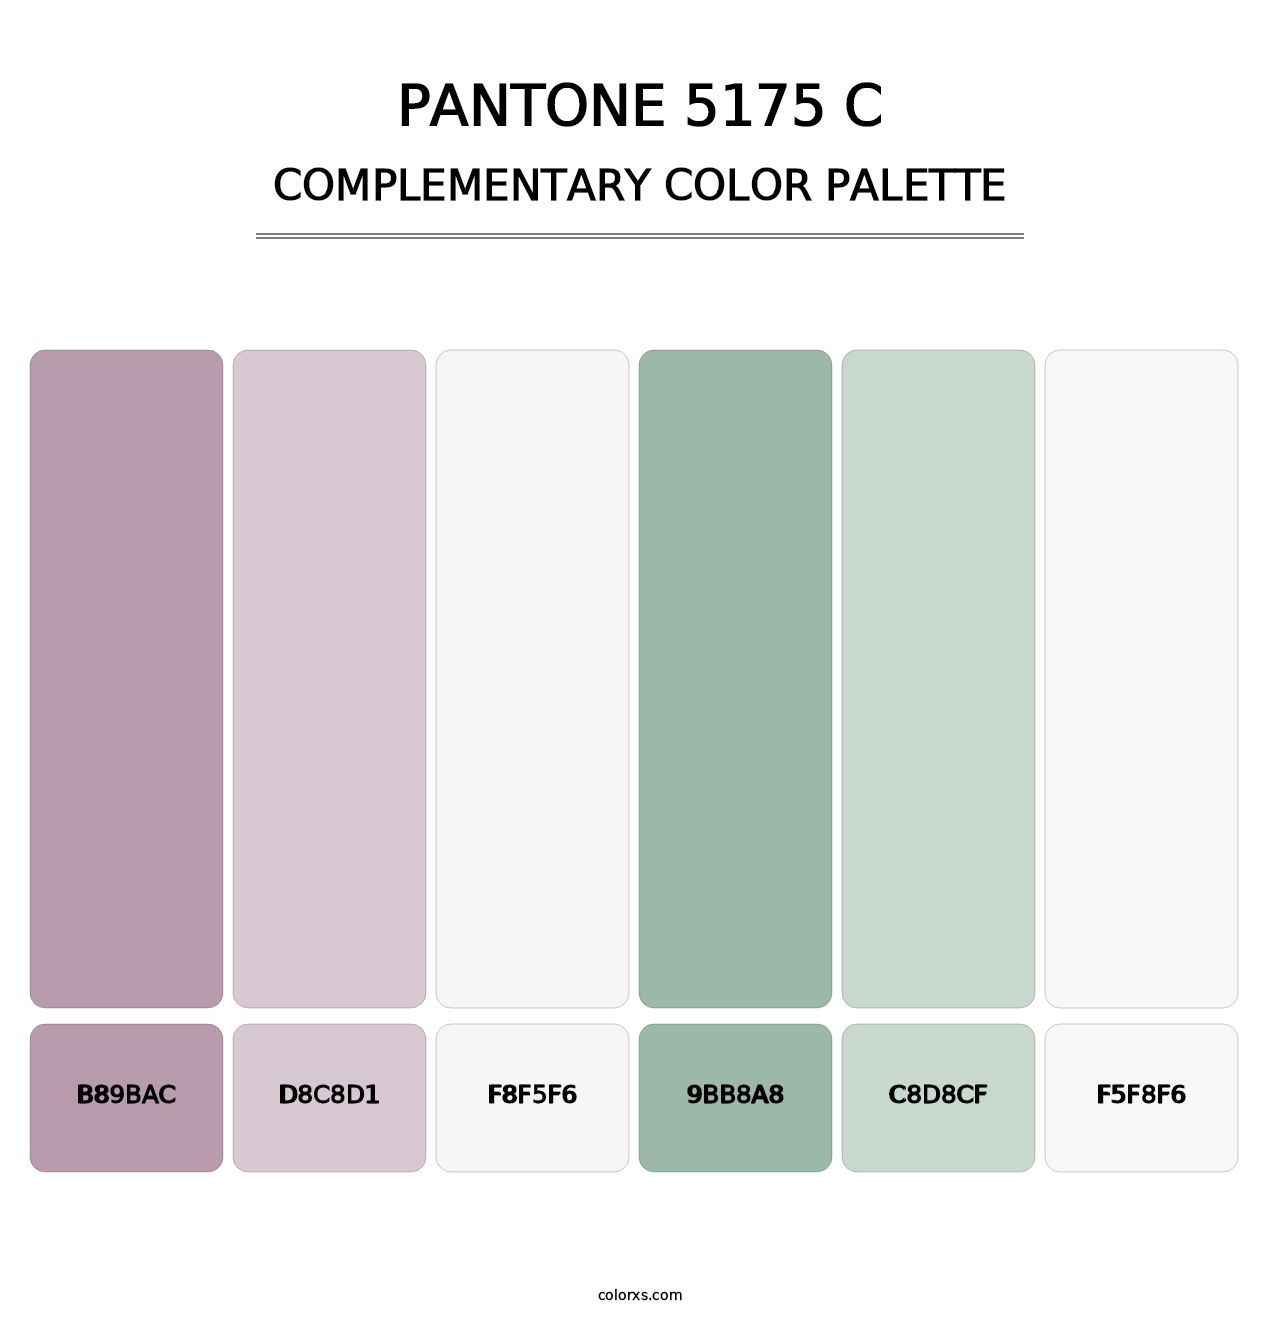 PANTONE 5175 C - Complementary Color Palette